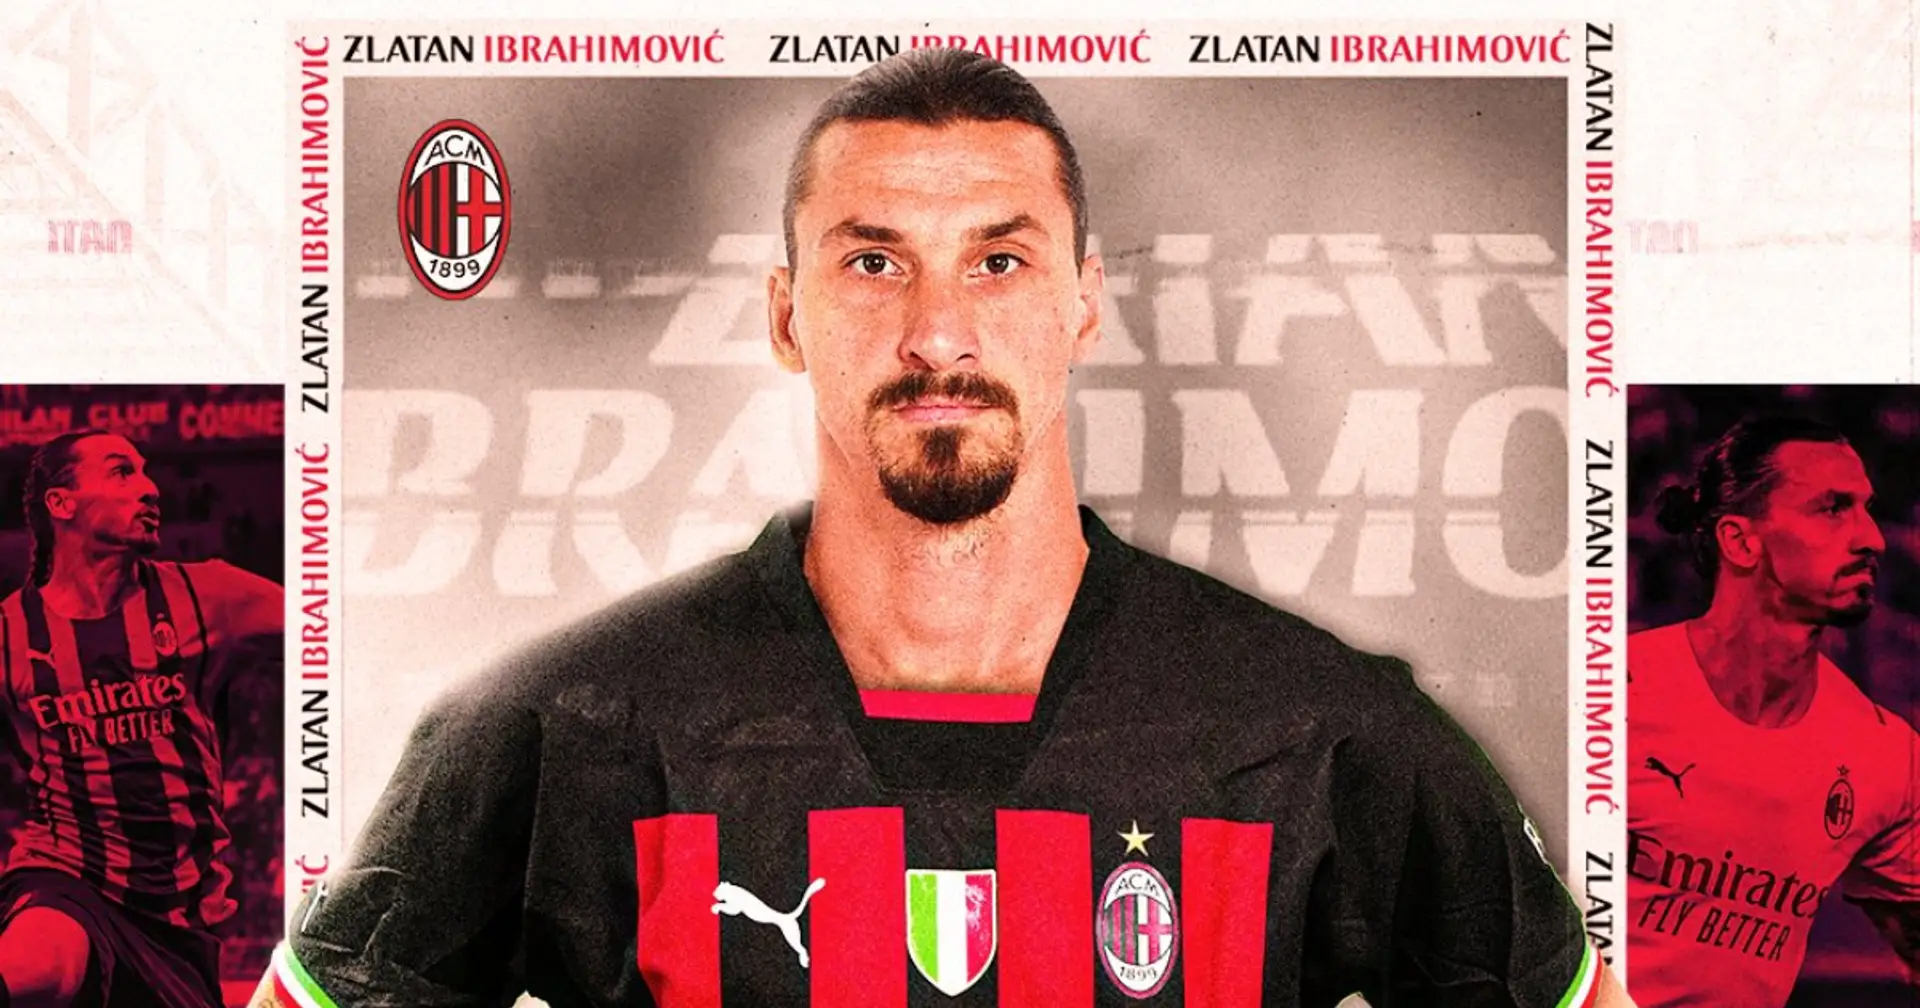 OFFICIAL: Zlatan Ibrahimovic signs new Milan deal